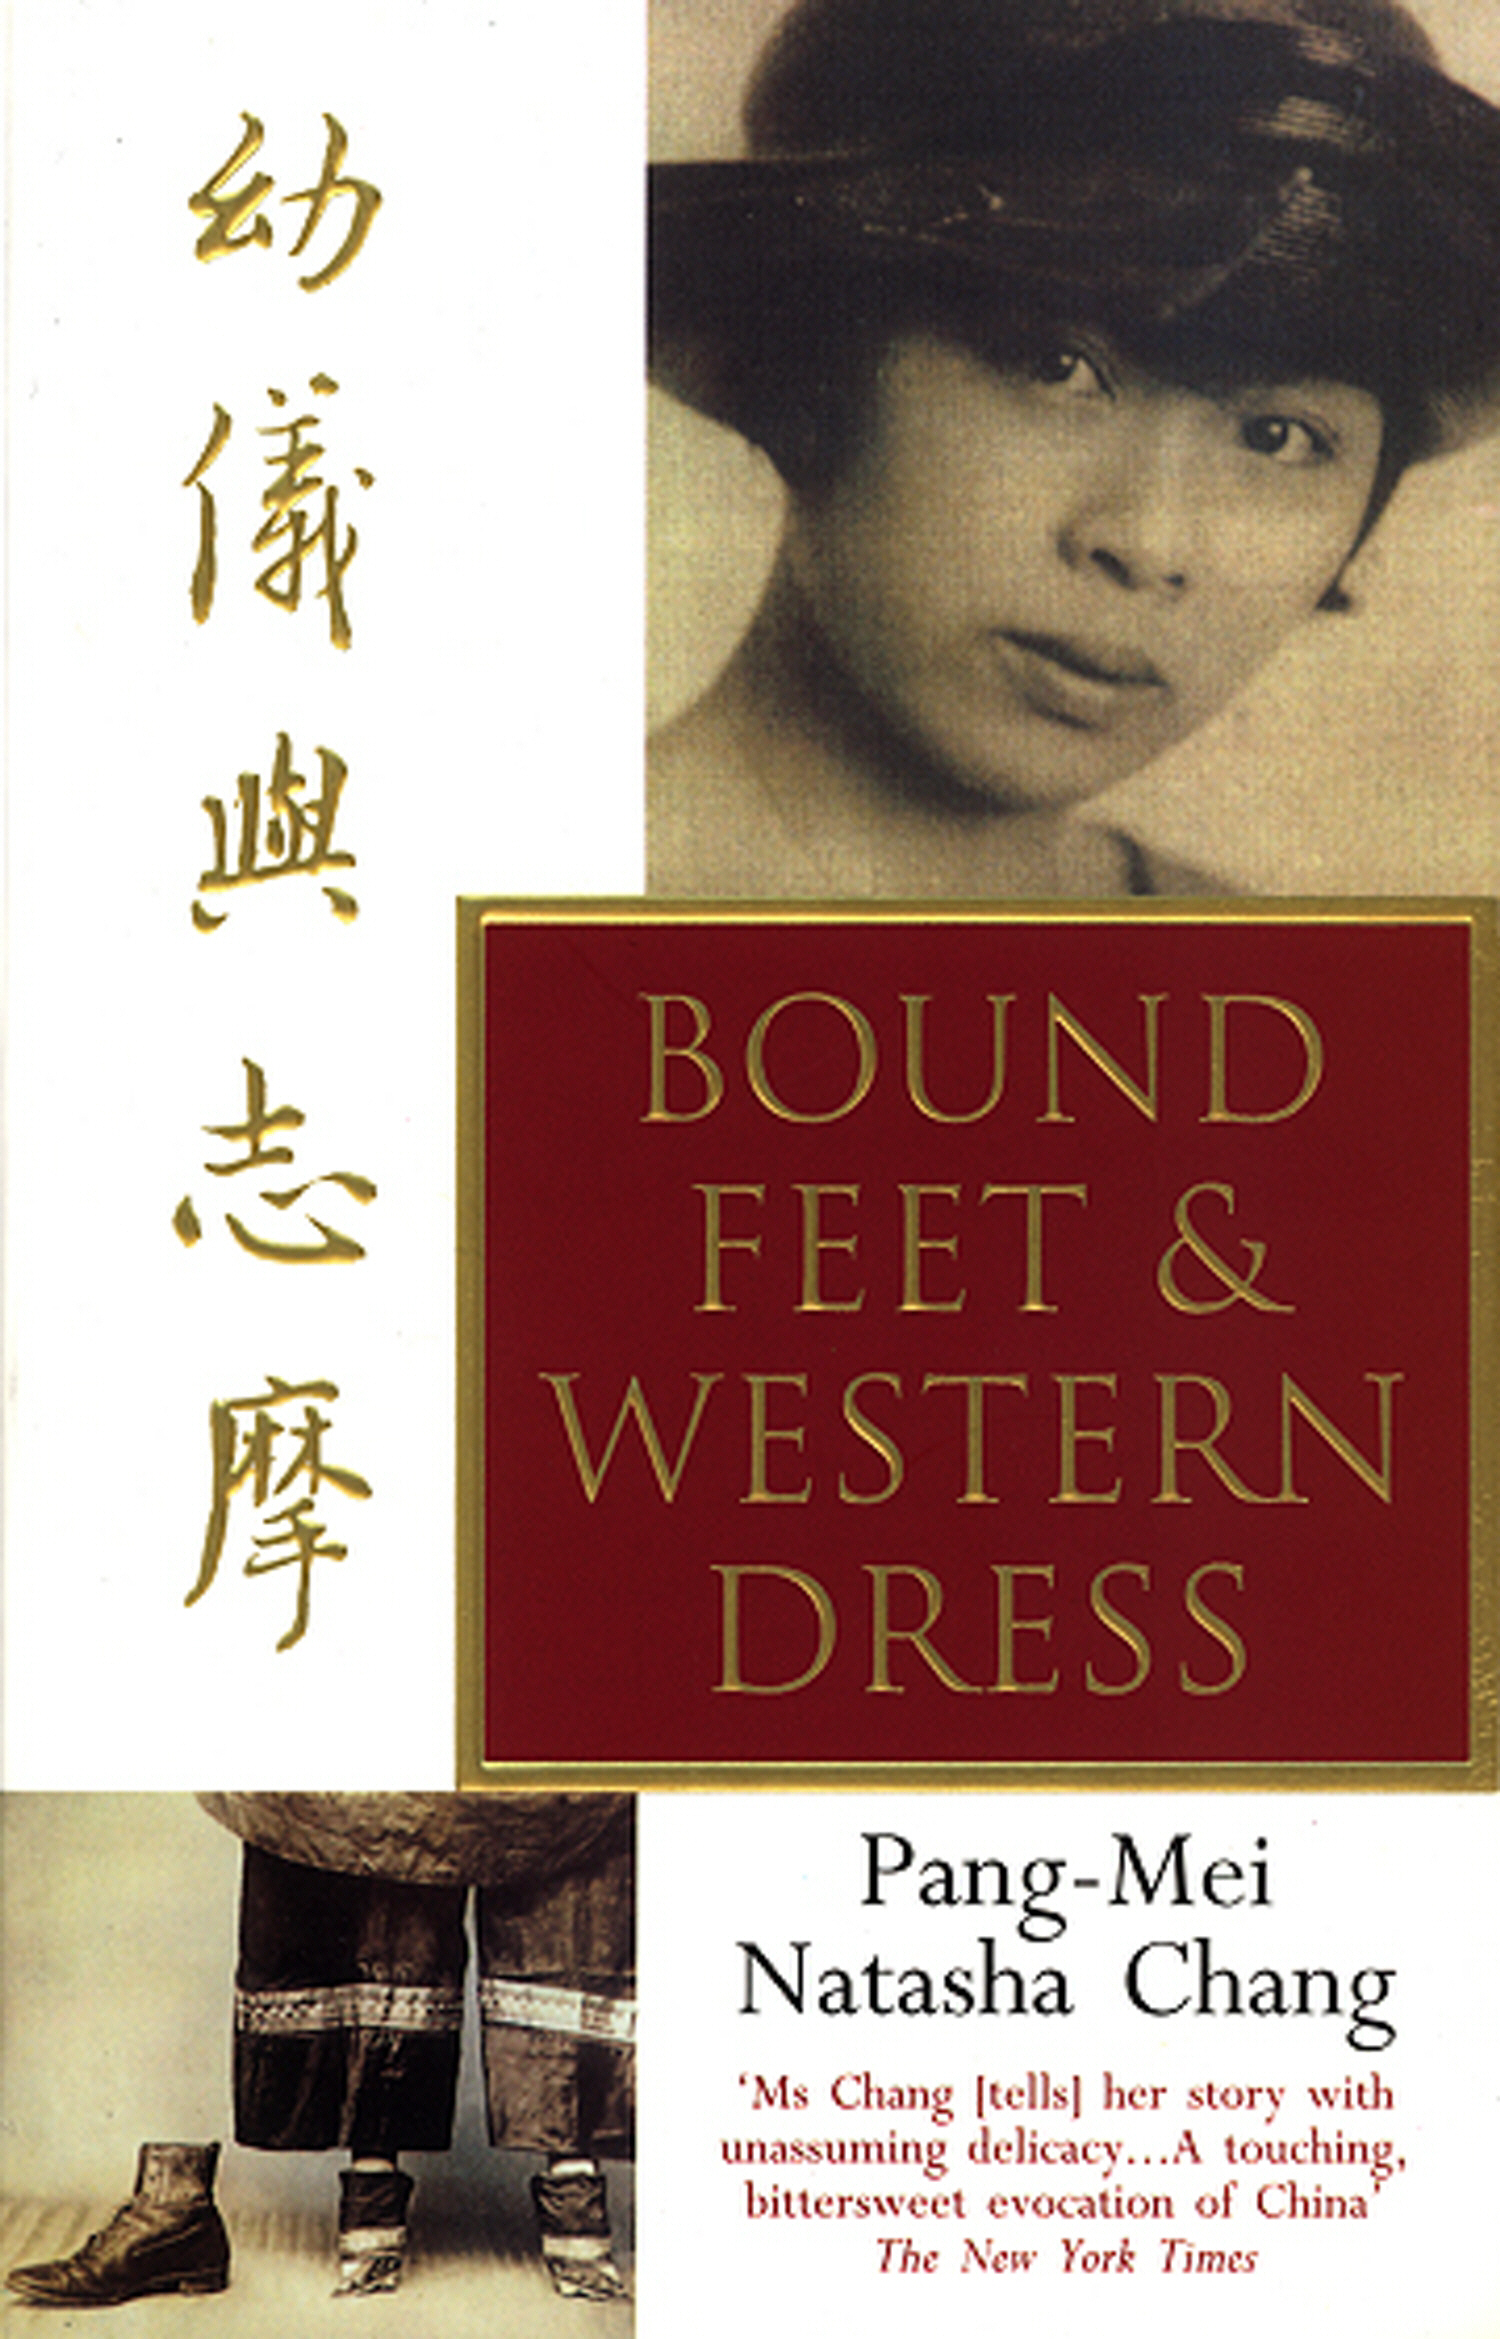 Bound feet & Western Dress by pang-Mei Natasha Chang book. Bound feet & Western Dress by pang-Mei Natasha Chang. The Binding книга на русском. Bound feet.